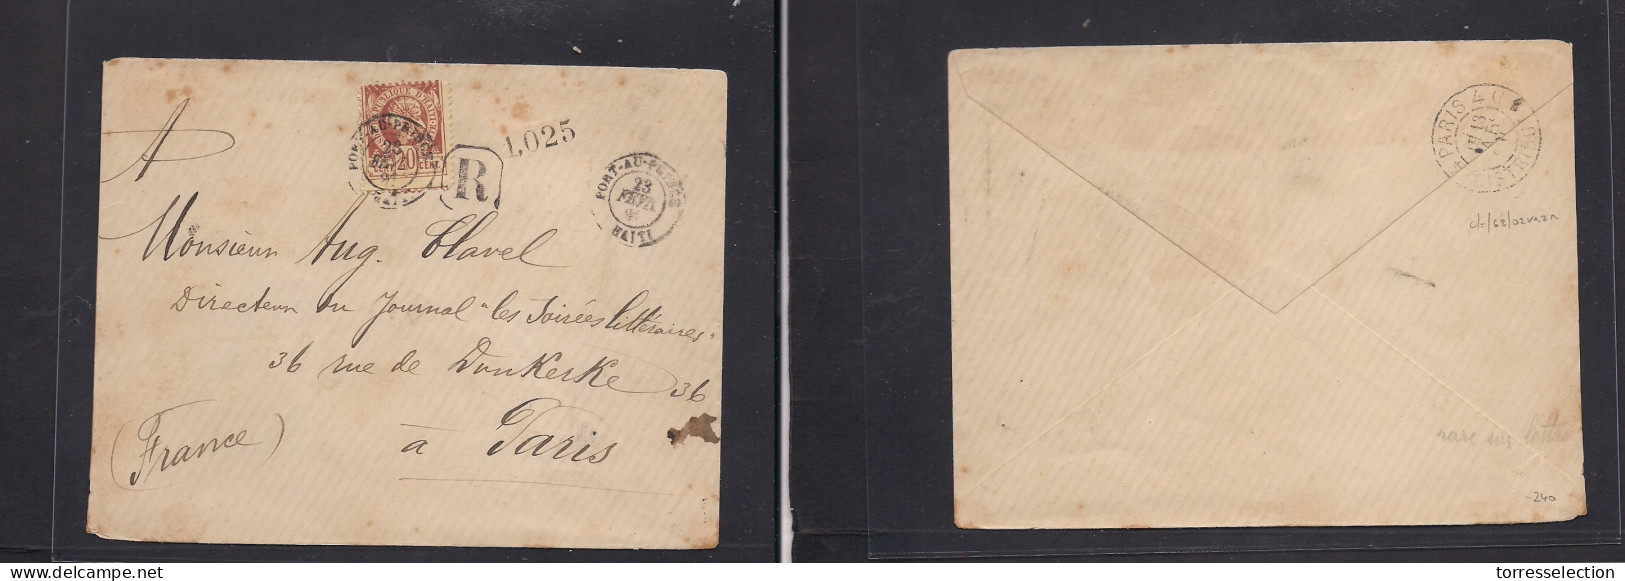 HAITI. 1891 (23 Febr) Port Prince - Paris, France (13 March) Registered Single 20c Perf Fkd Env, Tied Cds + R-cachet. Fi - Haiti